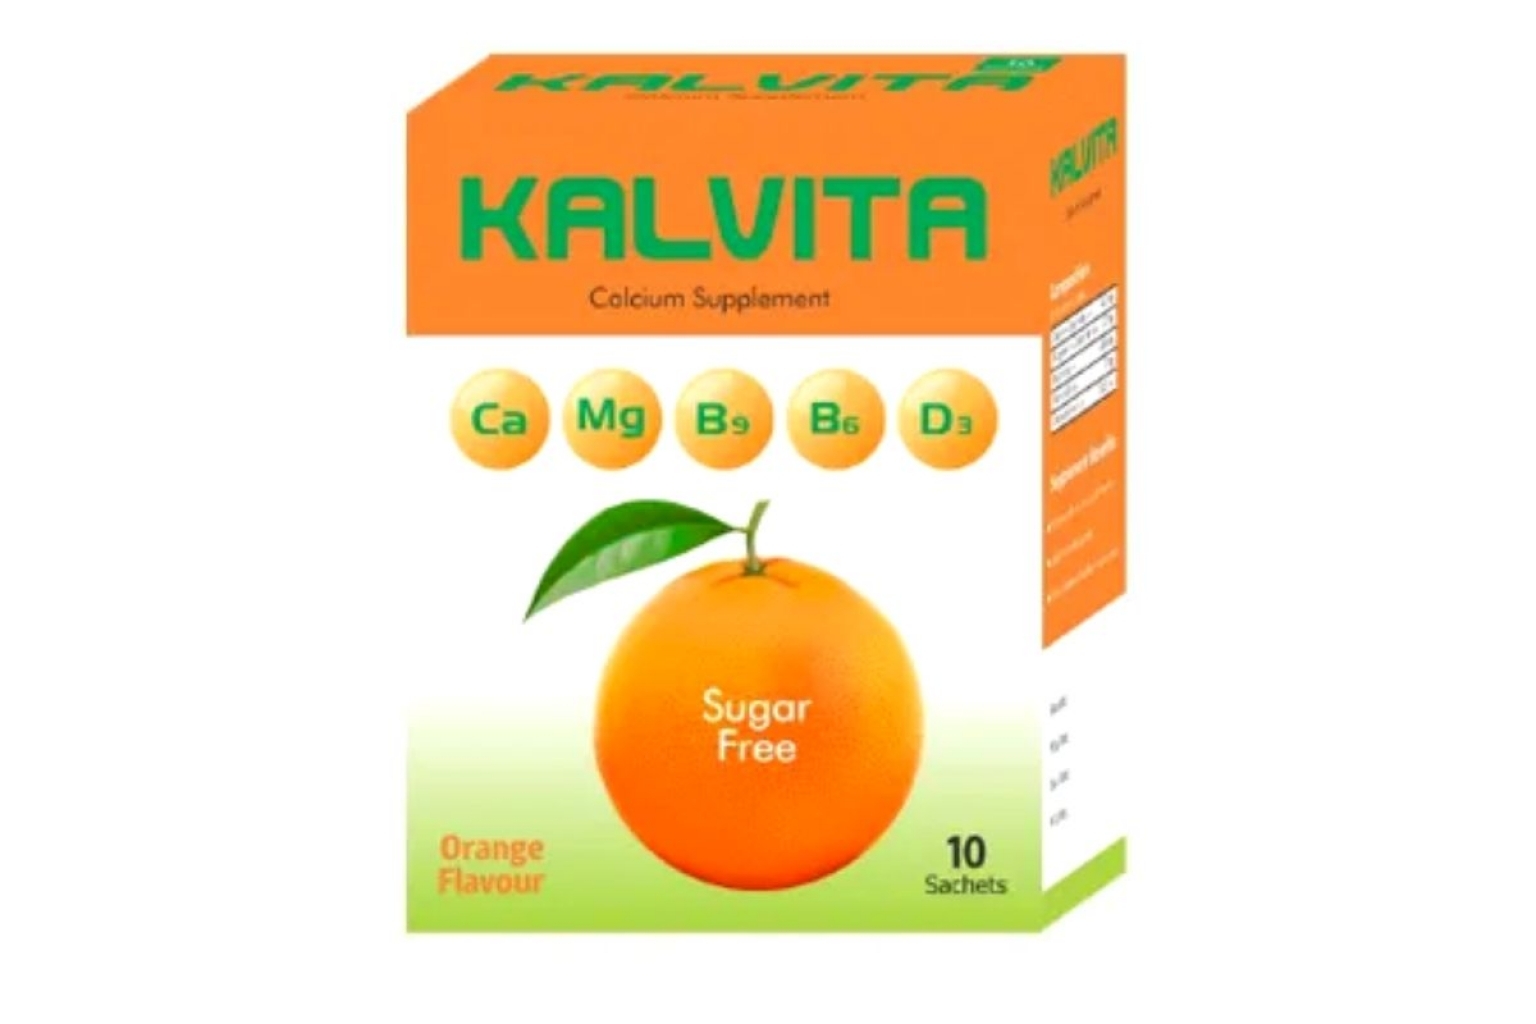 Buy Bristol Kalvita Calcium Magnicium and Vitamin Supplement (10 Sachets) in Pakistan | online shopping in Pakistan